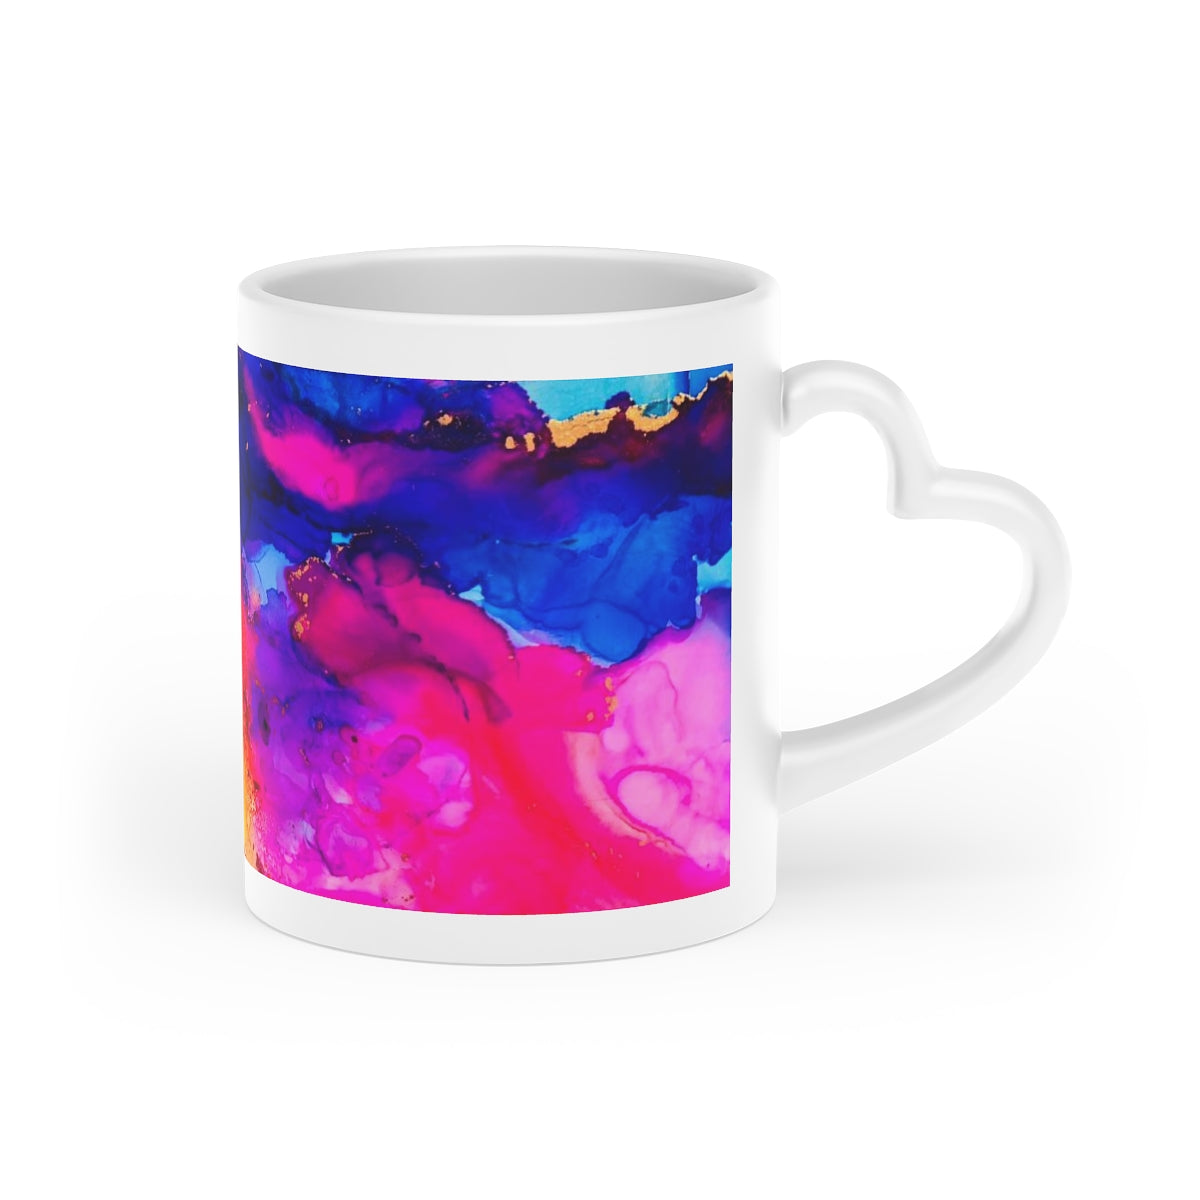 "Cosmic Swirl" Heart-Shaped Mug